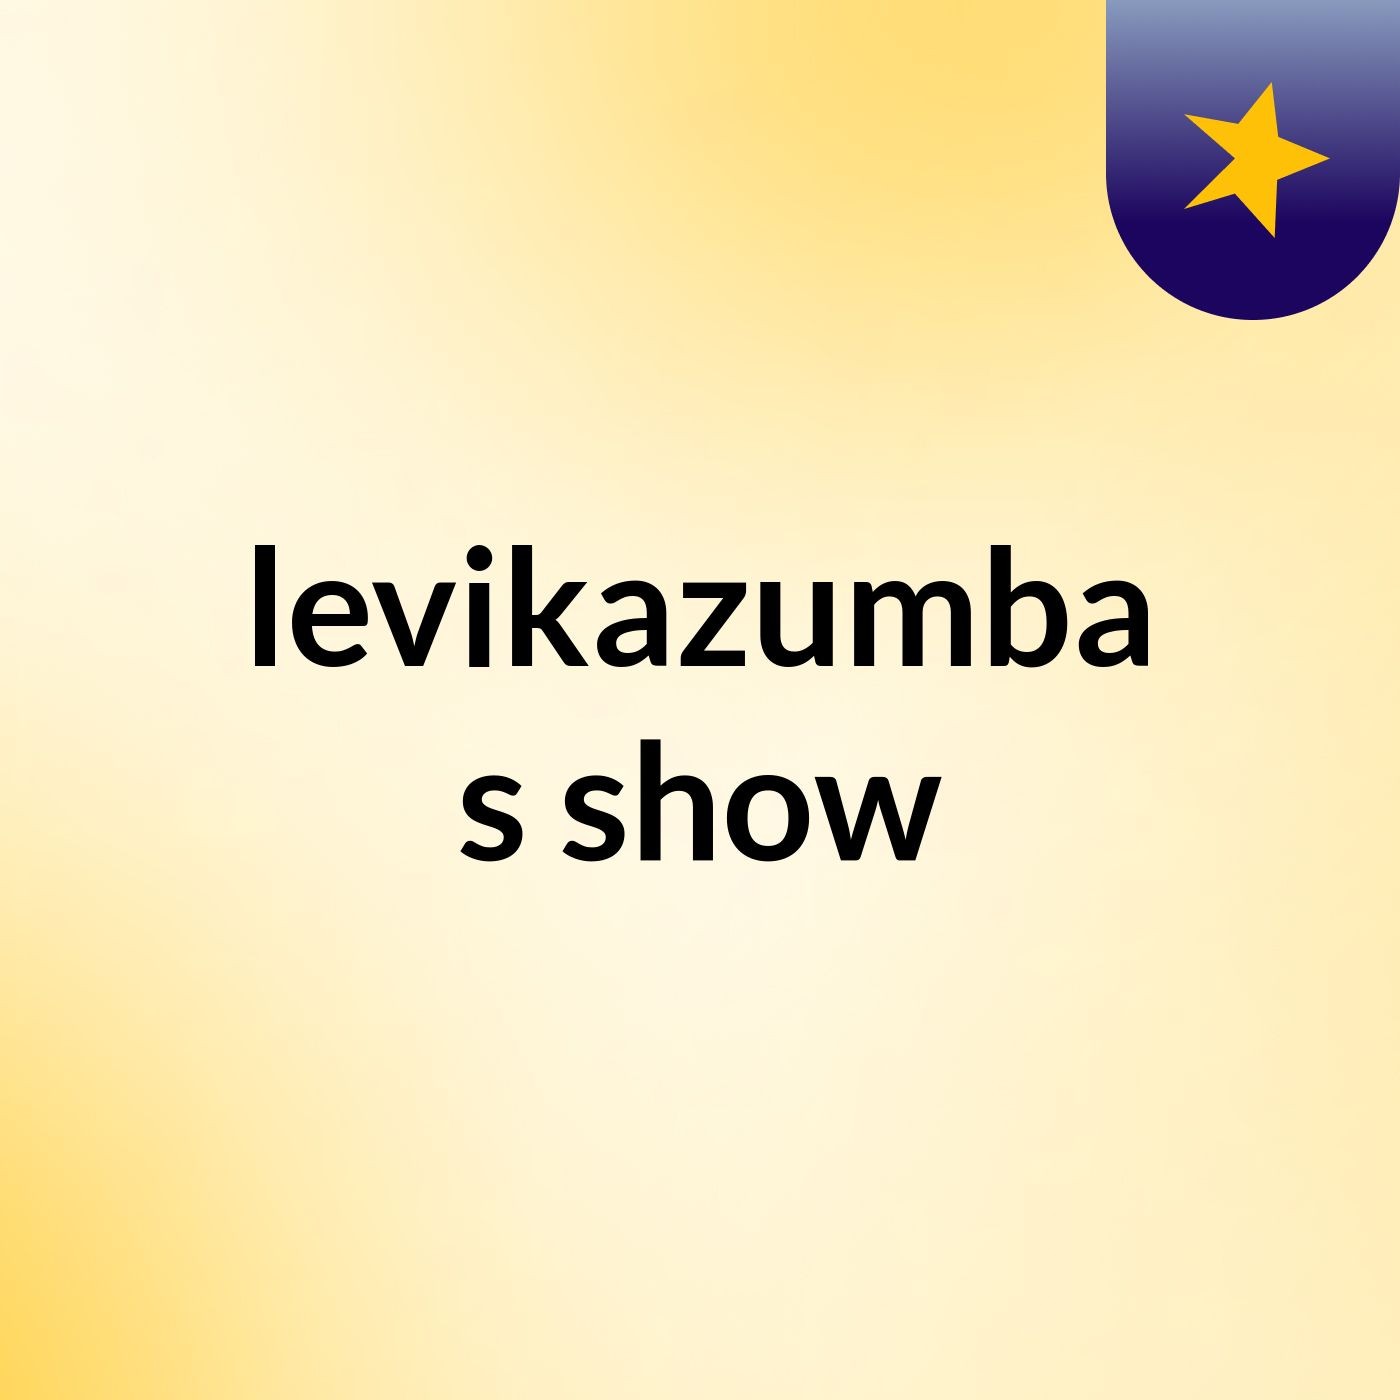 levikazumba's show